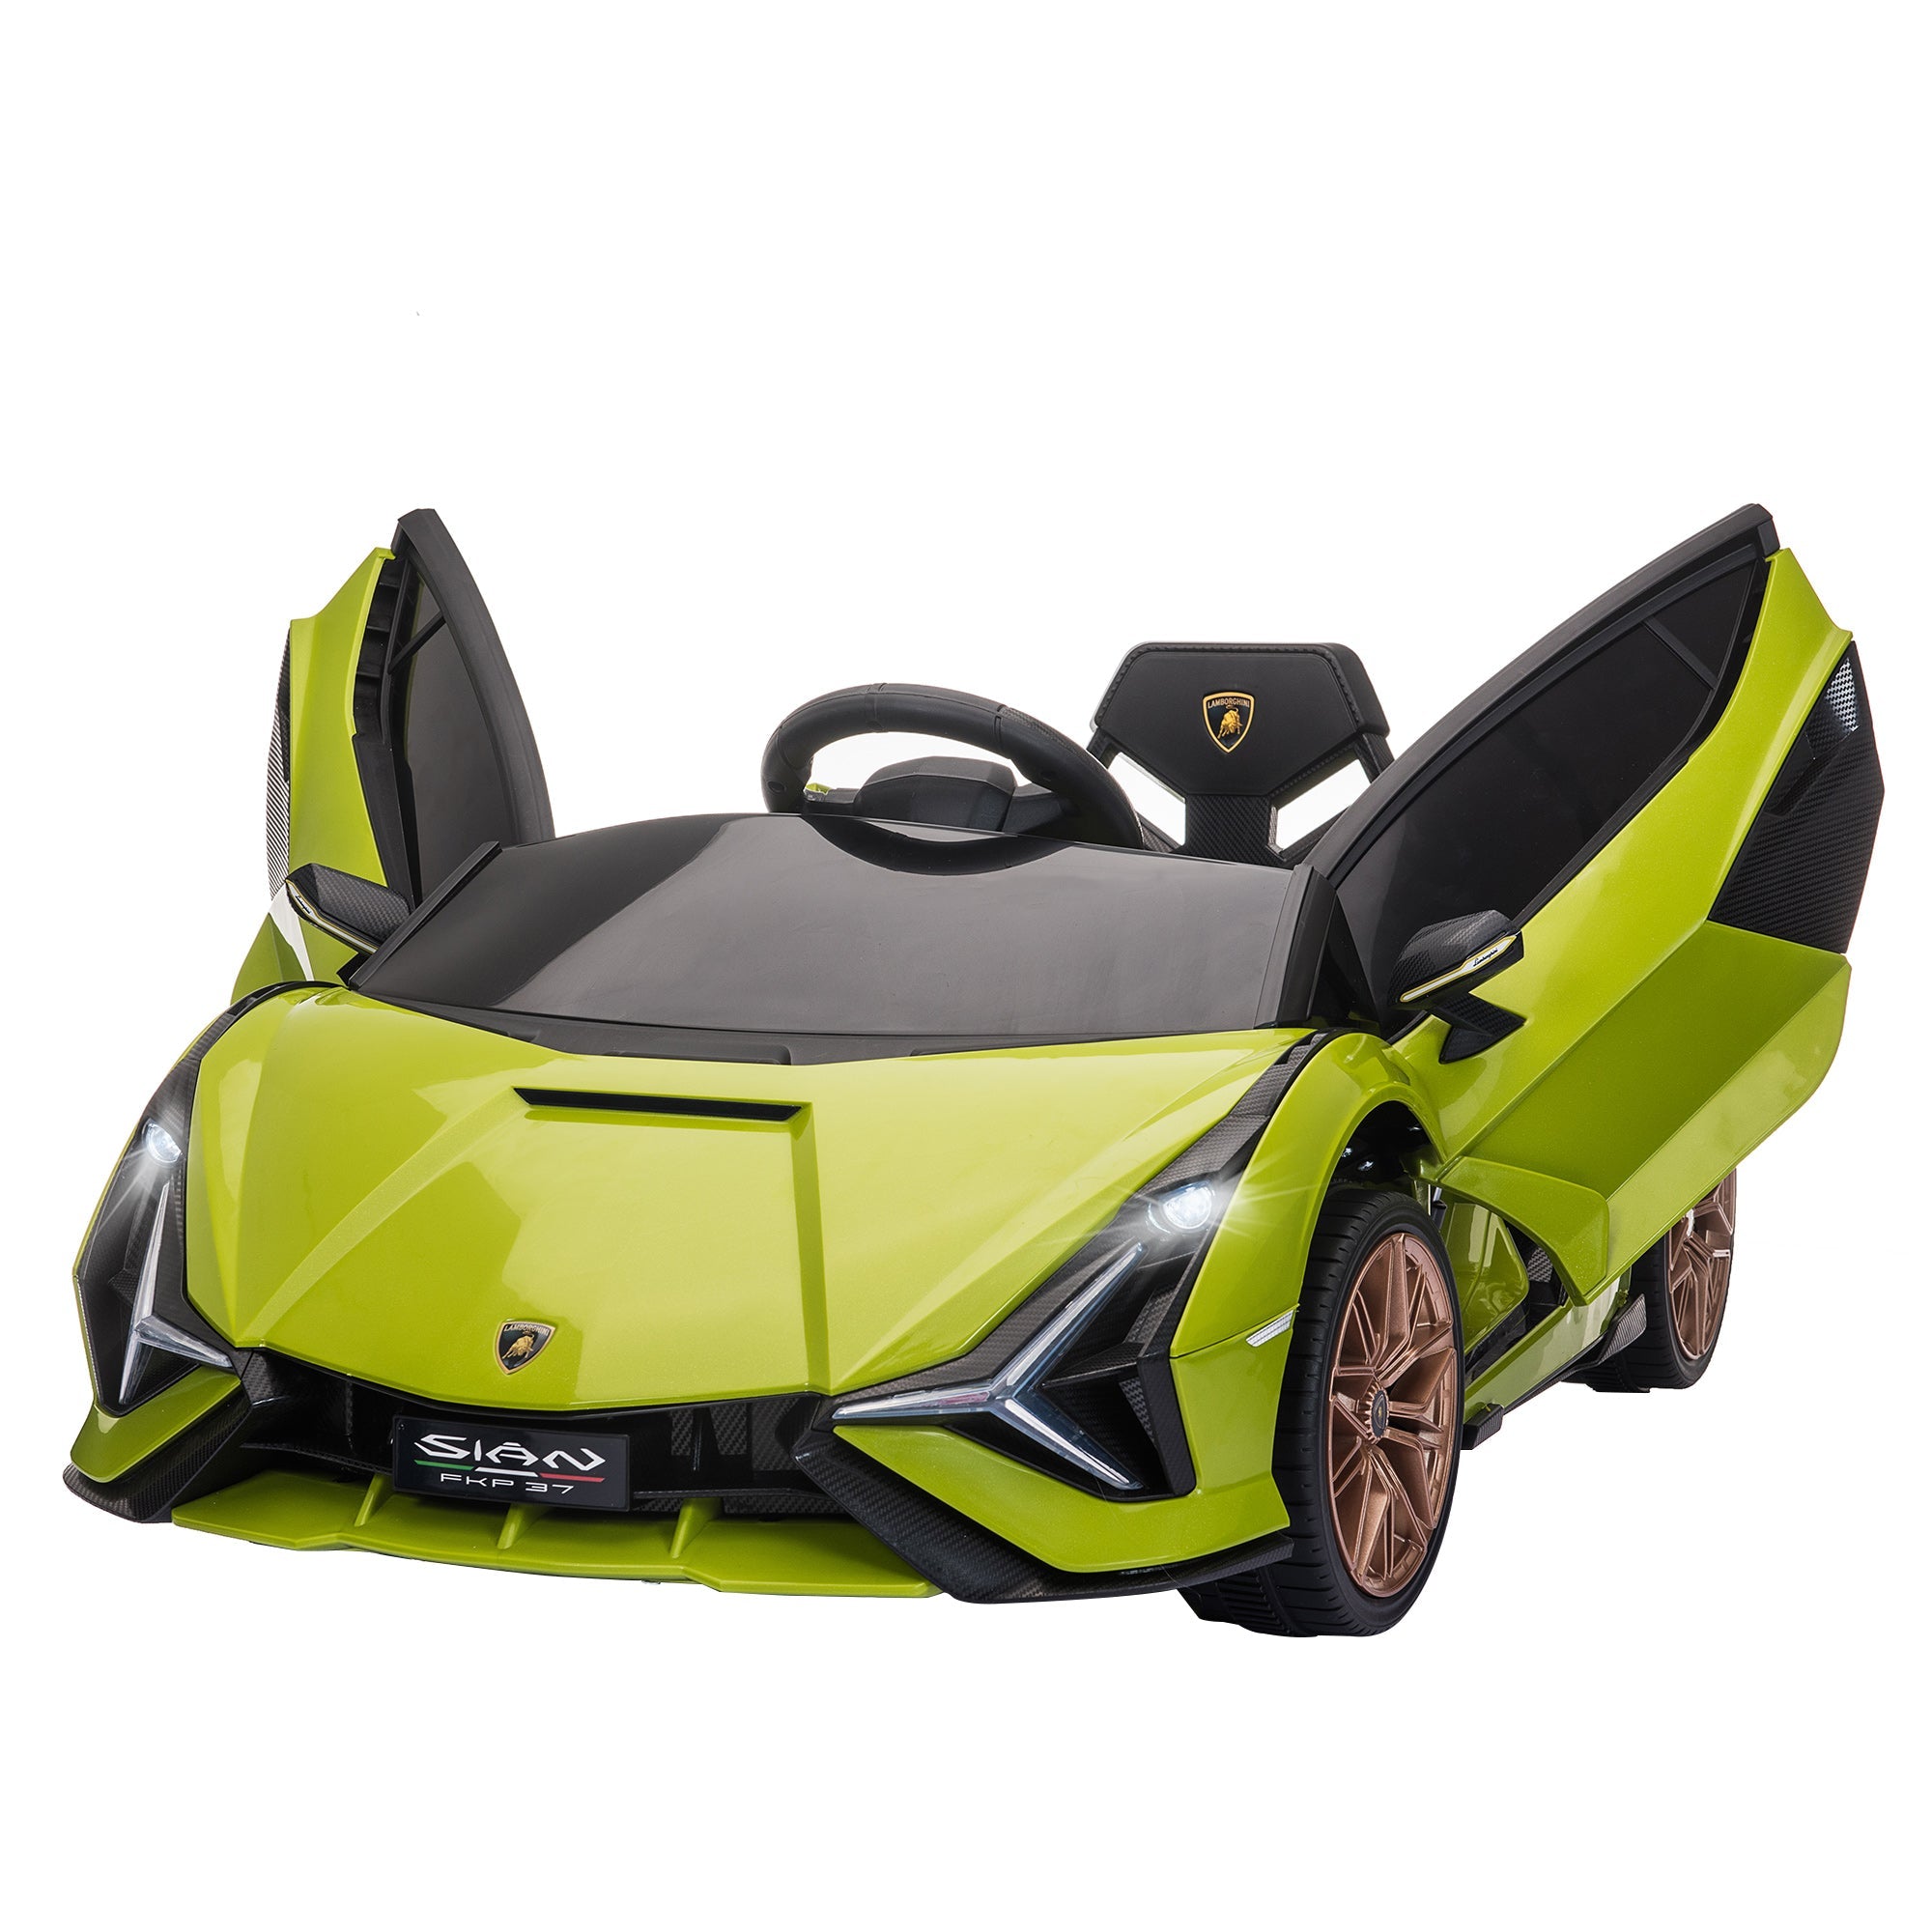 HOMCOM Licensed Lamborghini 12V Kids Electric Ride On Car with Remote Control (Green)